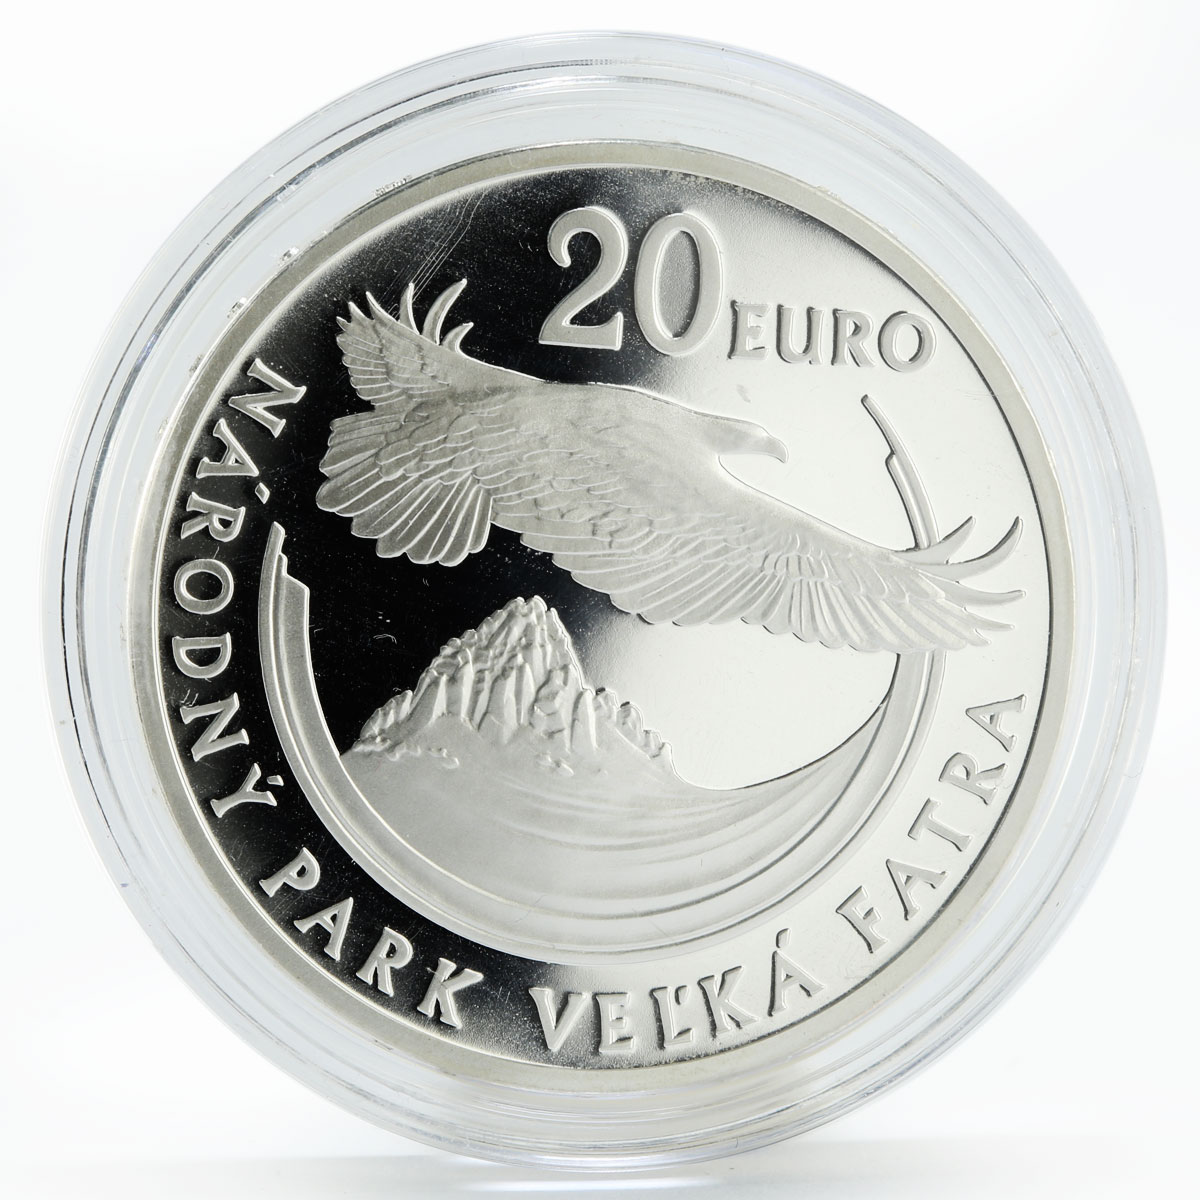 Slovakia 20 euro Velka Fatra National Park silver coin 2009